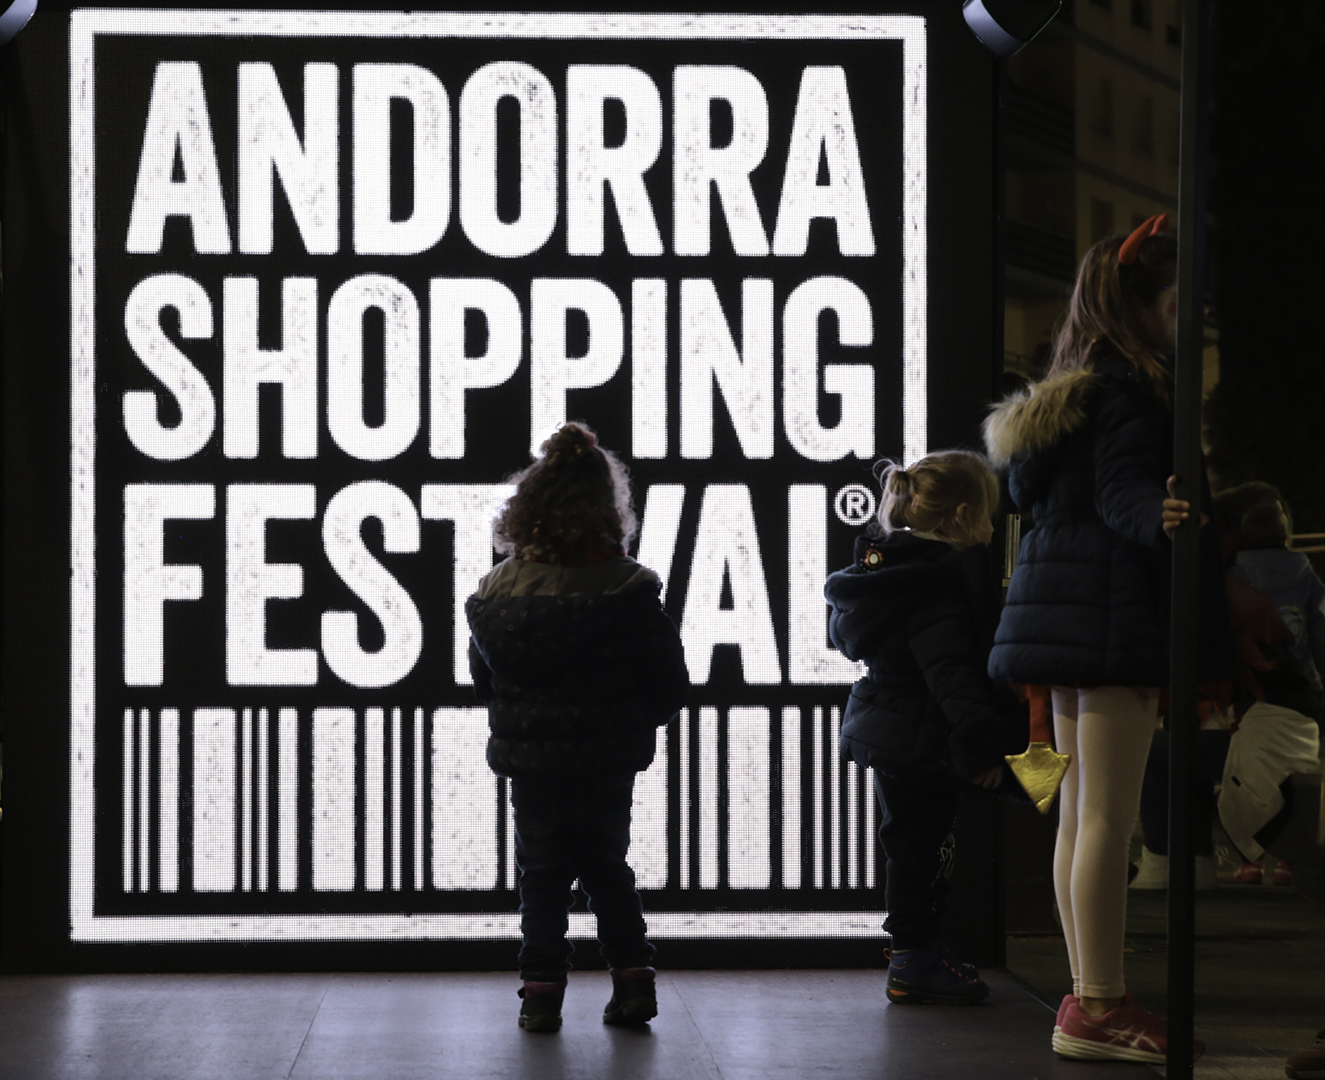 andorra shopping festival